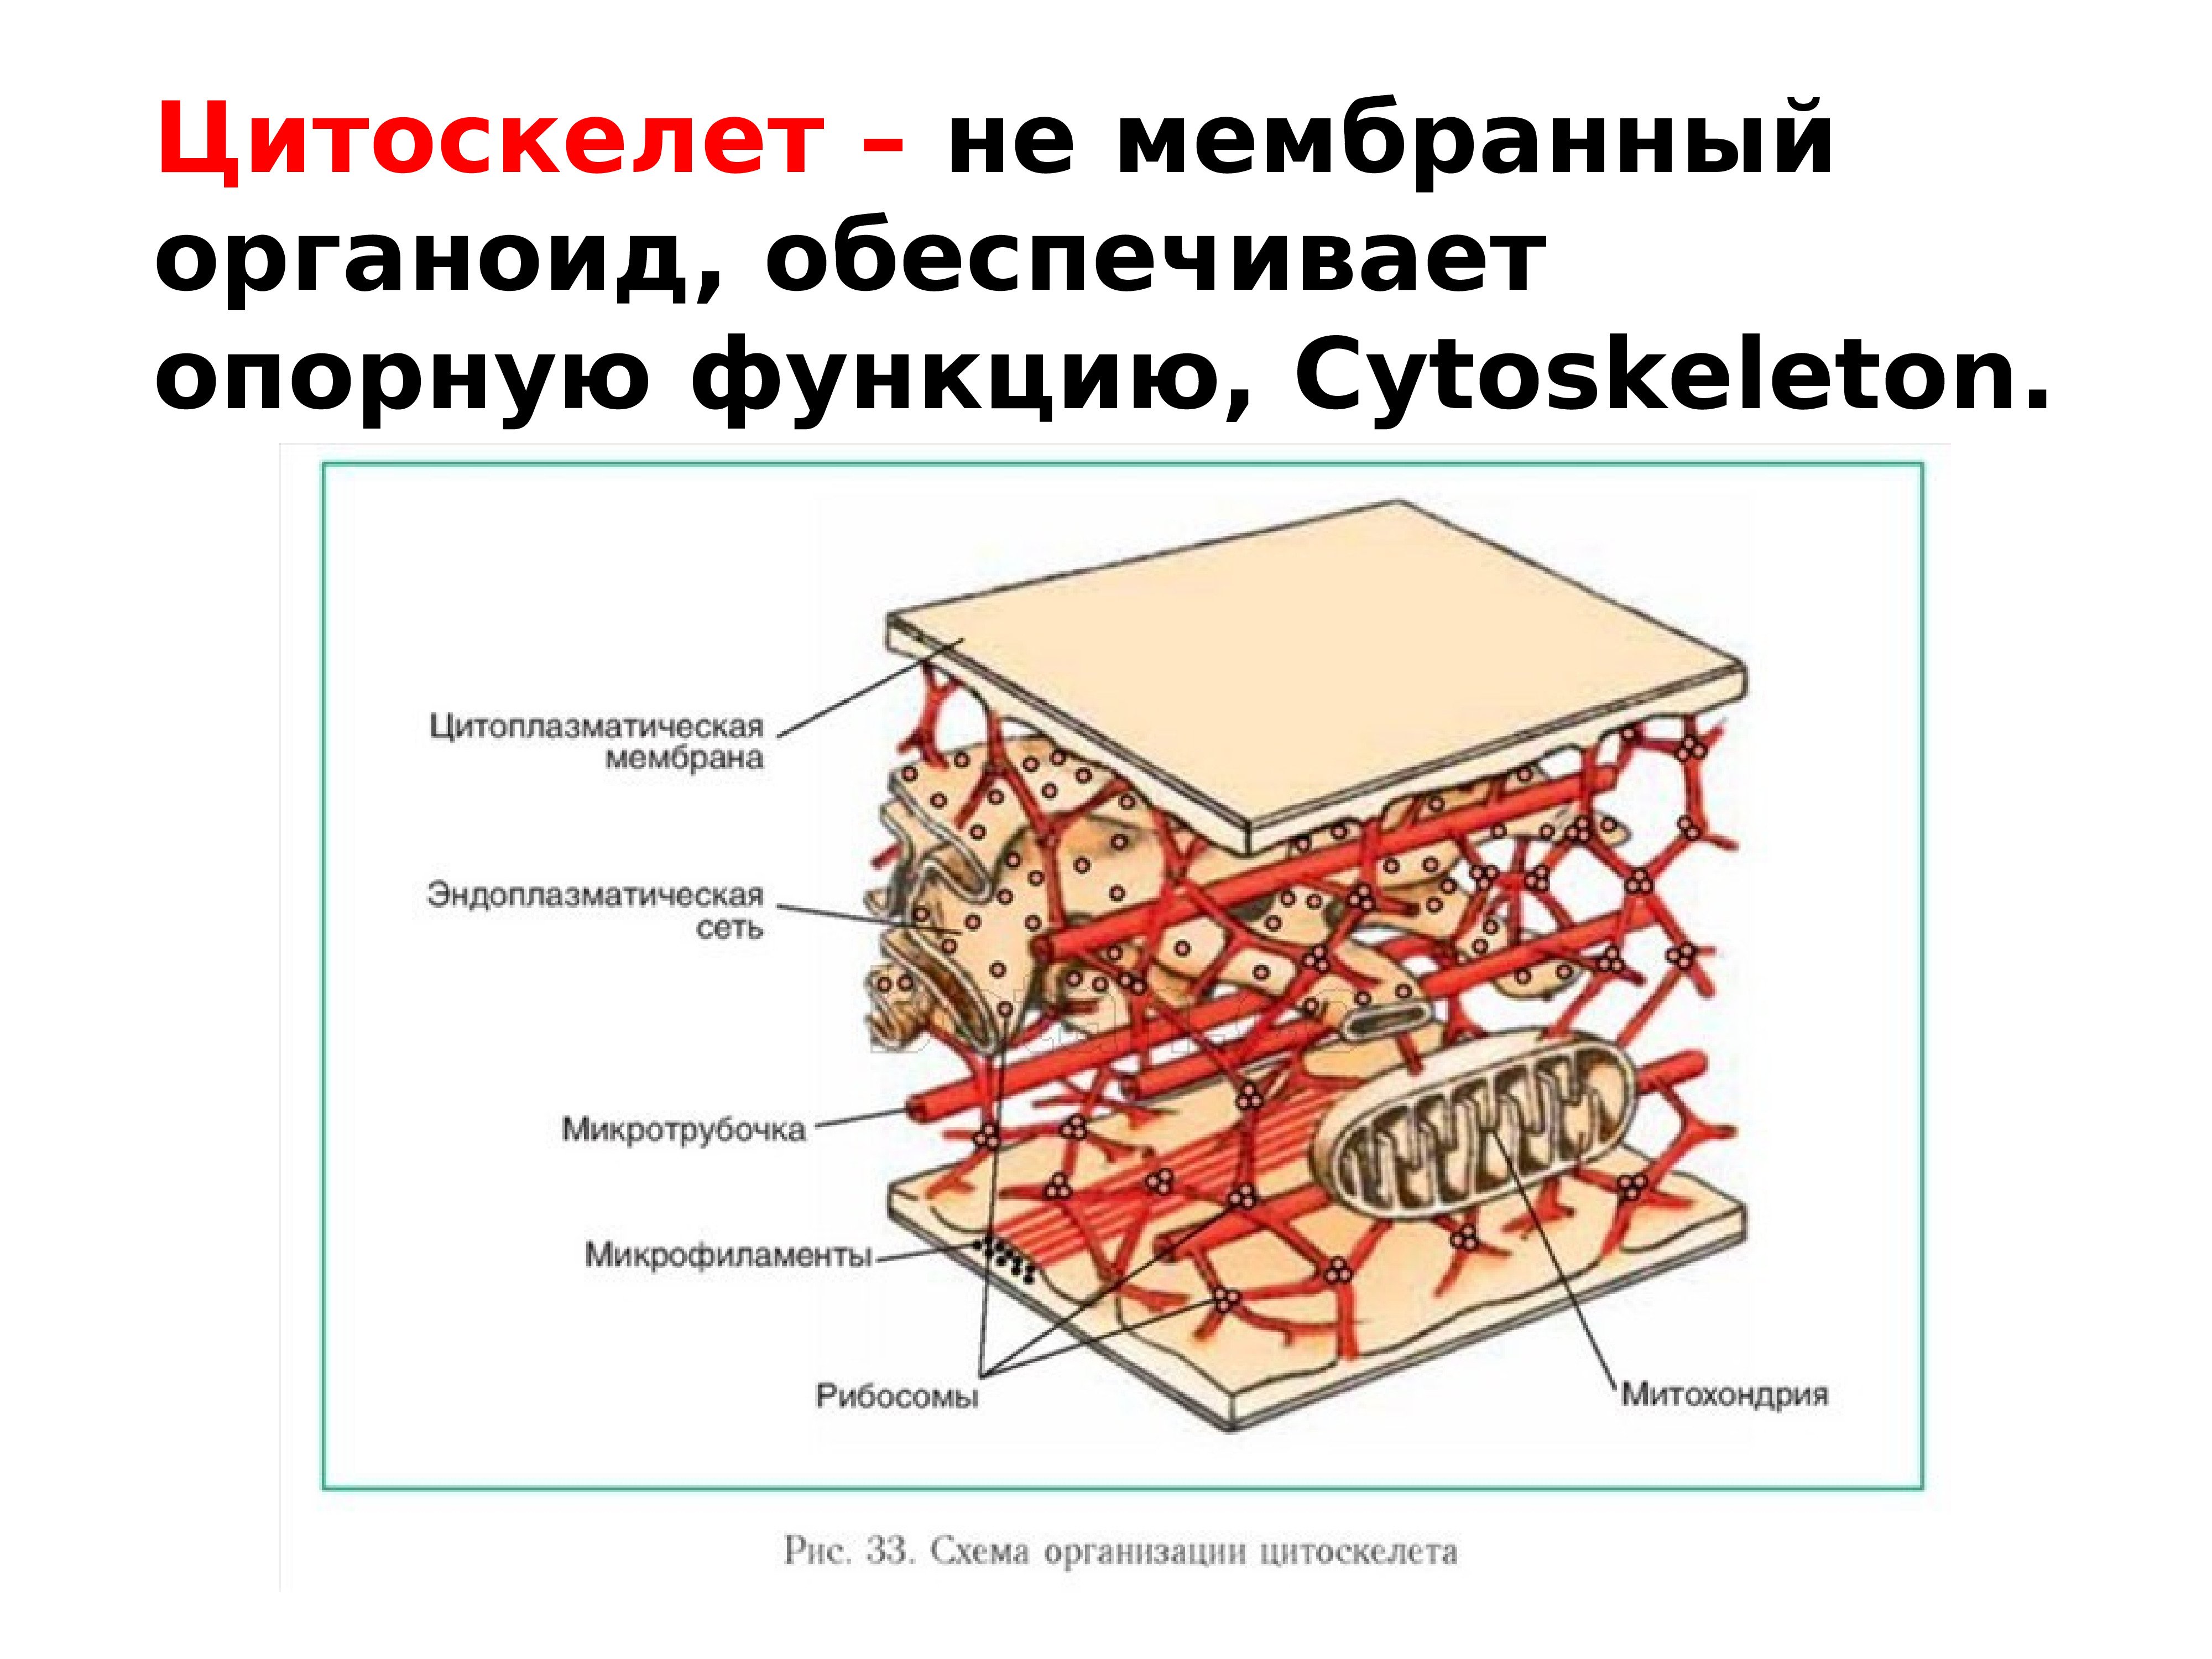 Цитоскелет клетки какой органоид. Цитоскелет схема ЕГЭ. Цитоскелет рисунок. Цитоскелет строение. Цитоскелет строение схематично.